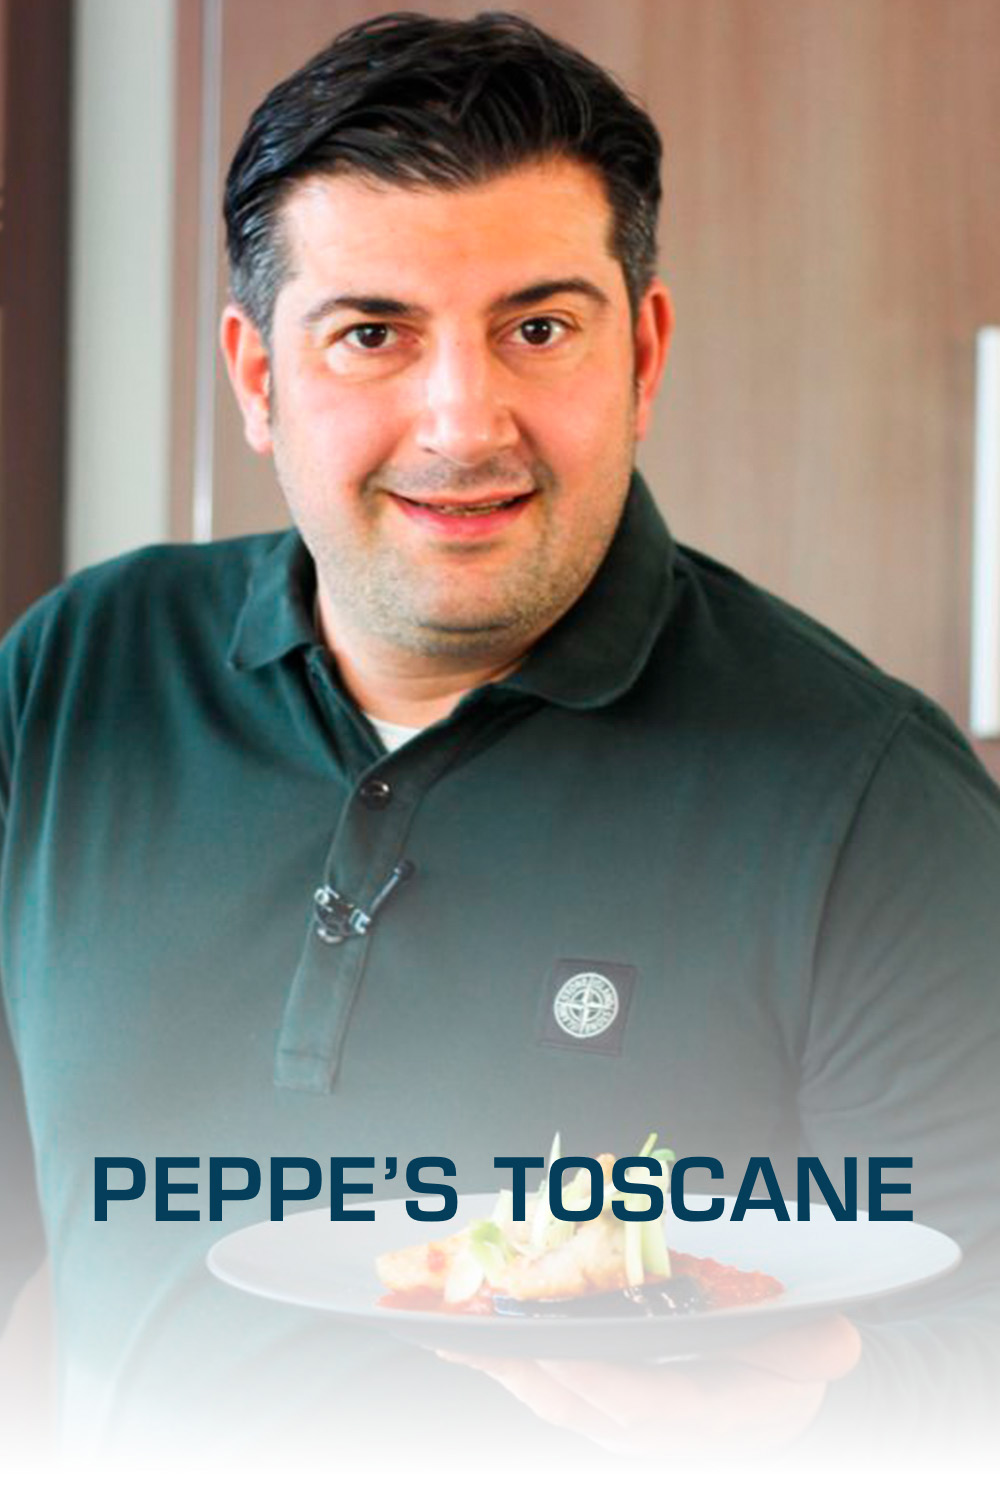 Peppe's Toscane